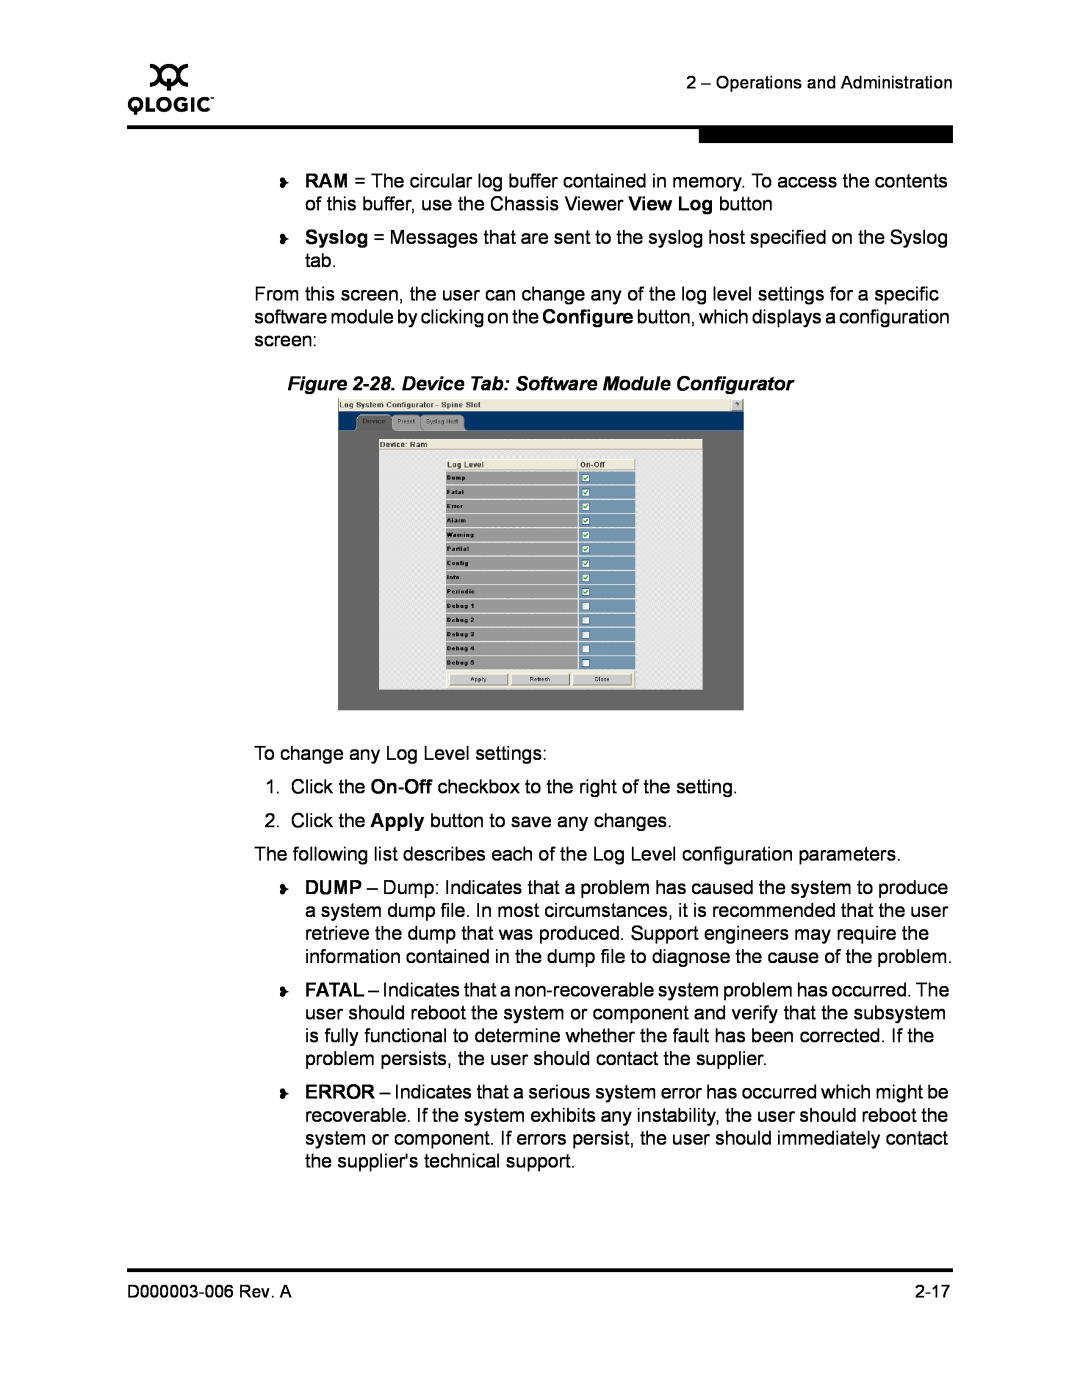 Q-Logic 9000 manual 28. Device Tab Software Module Configurator 